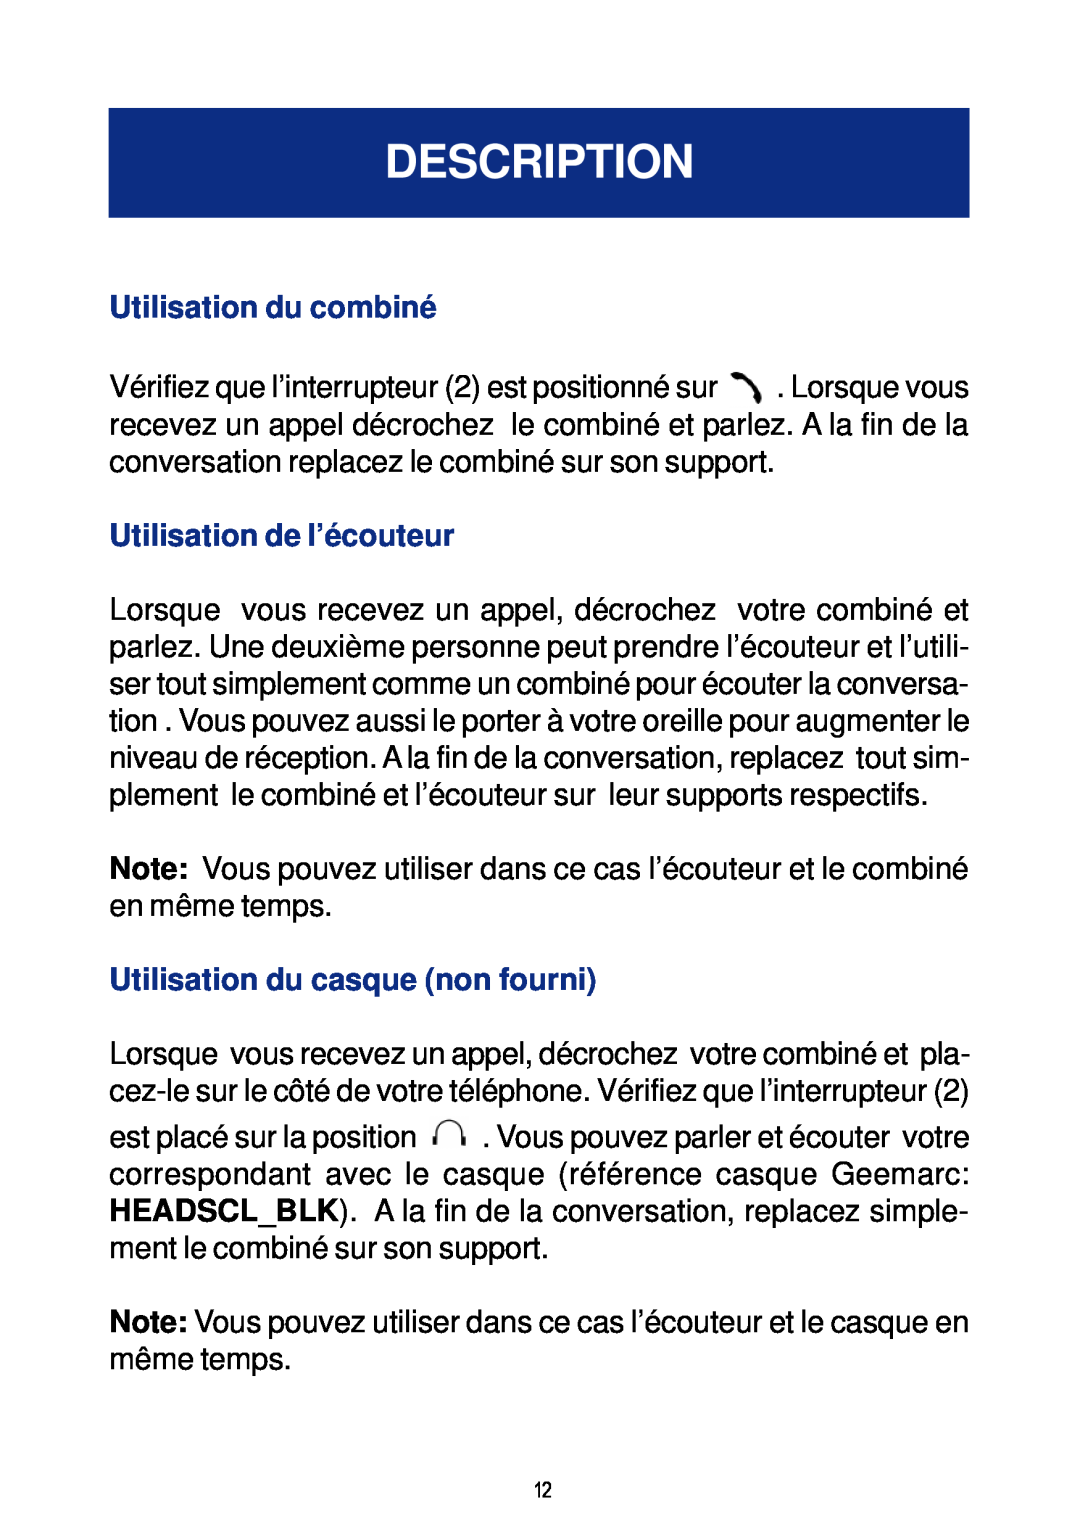 Geemarc CLA 1 manual Utilisation du combiné, Utilisation de l’écouteur, Utilisation du casque non fourni, Description 